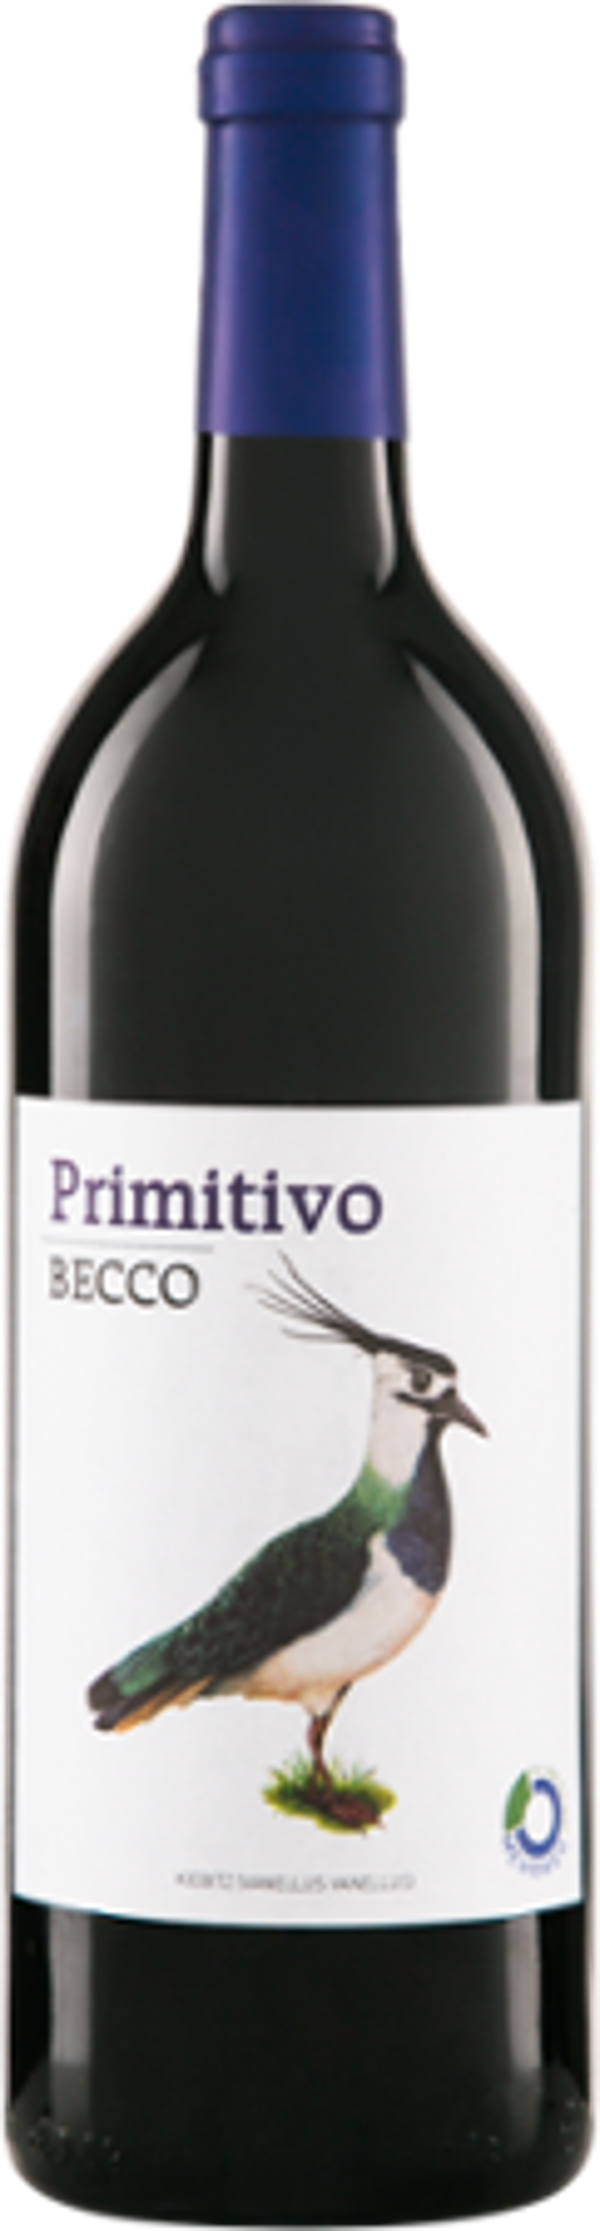 Produktfoto zu Kiste Becco Primitivo IGT Puglia6*1l